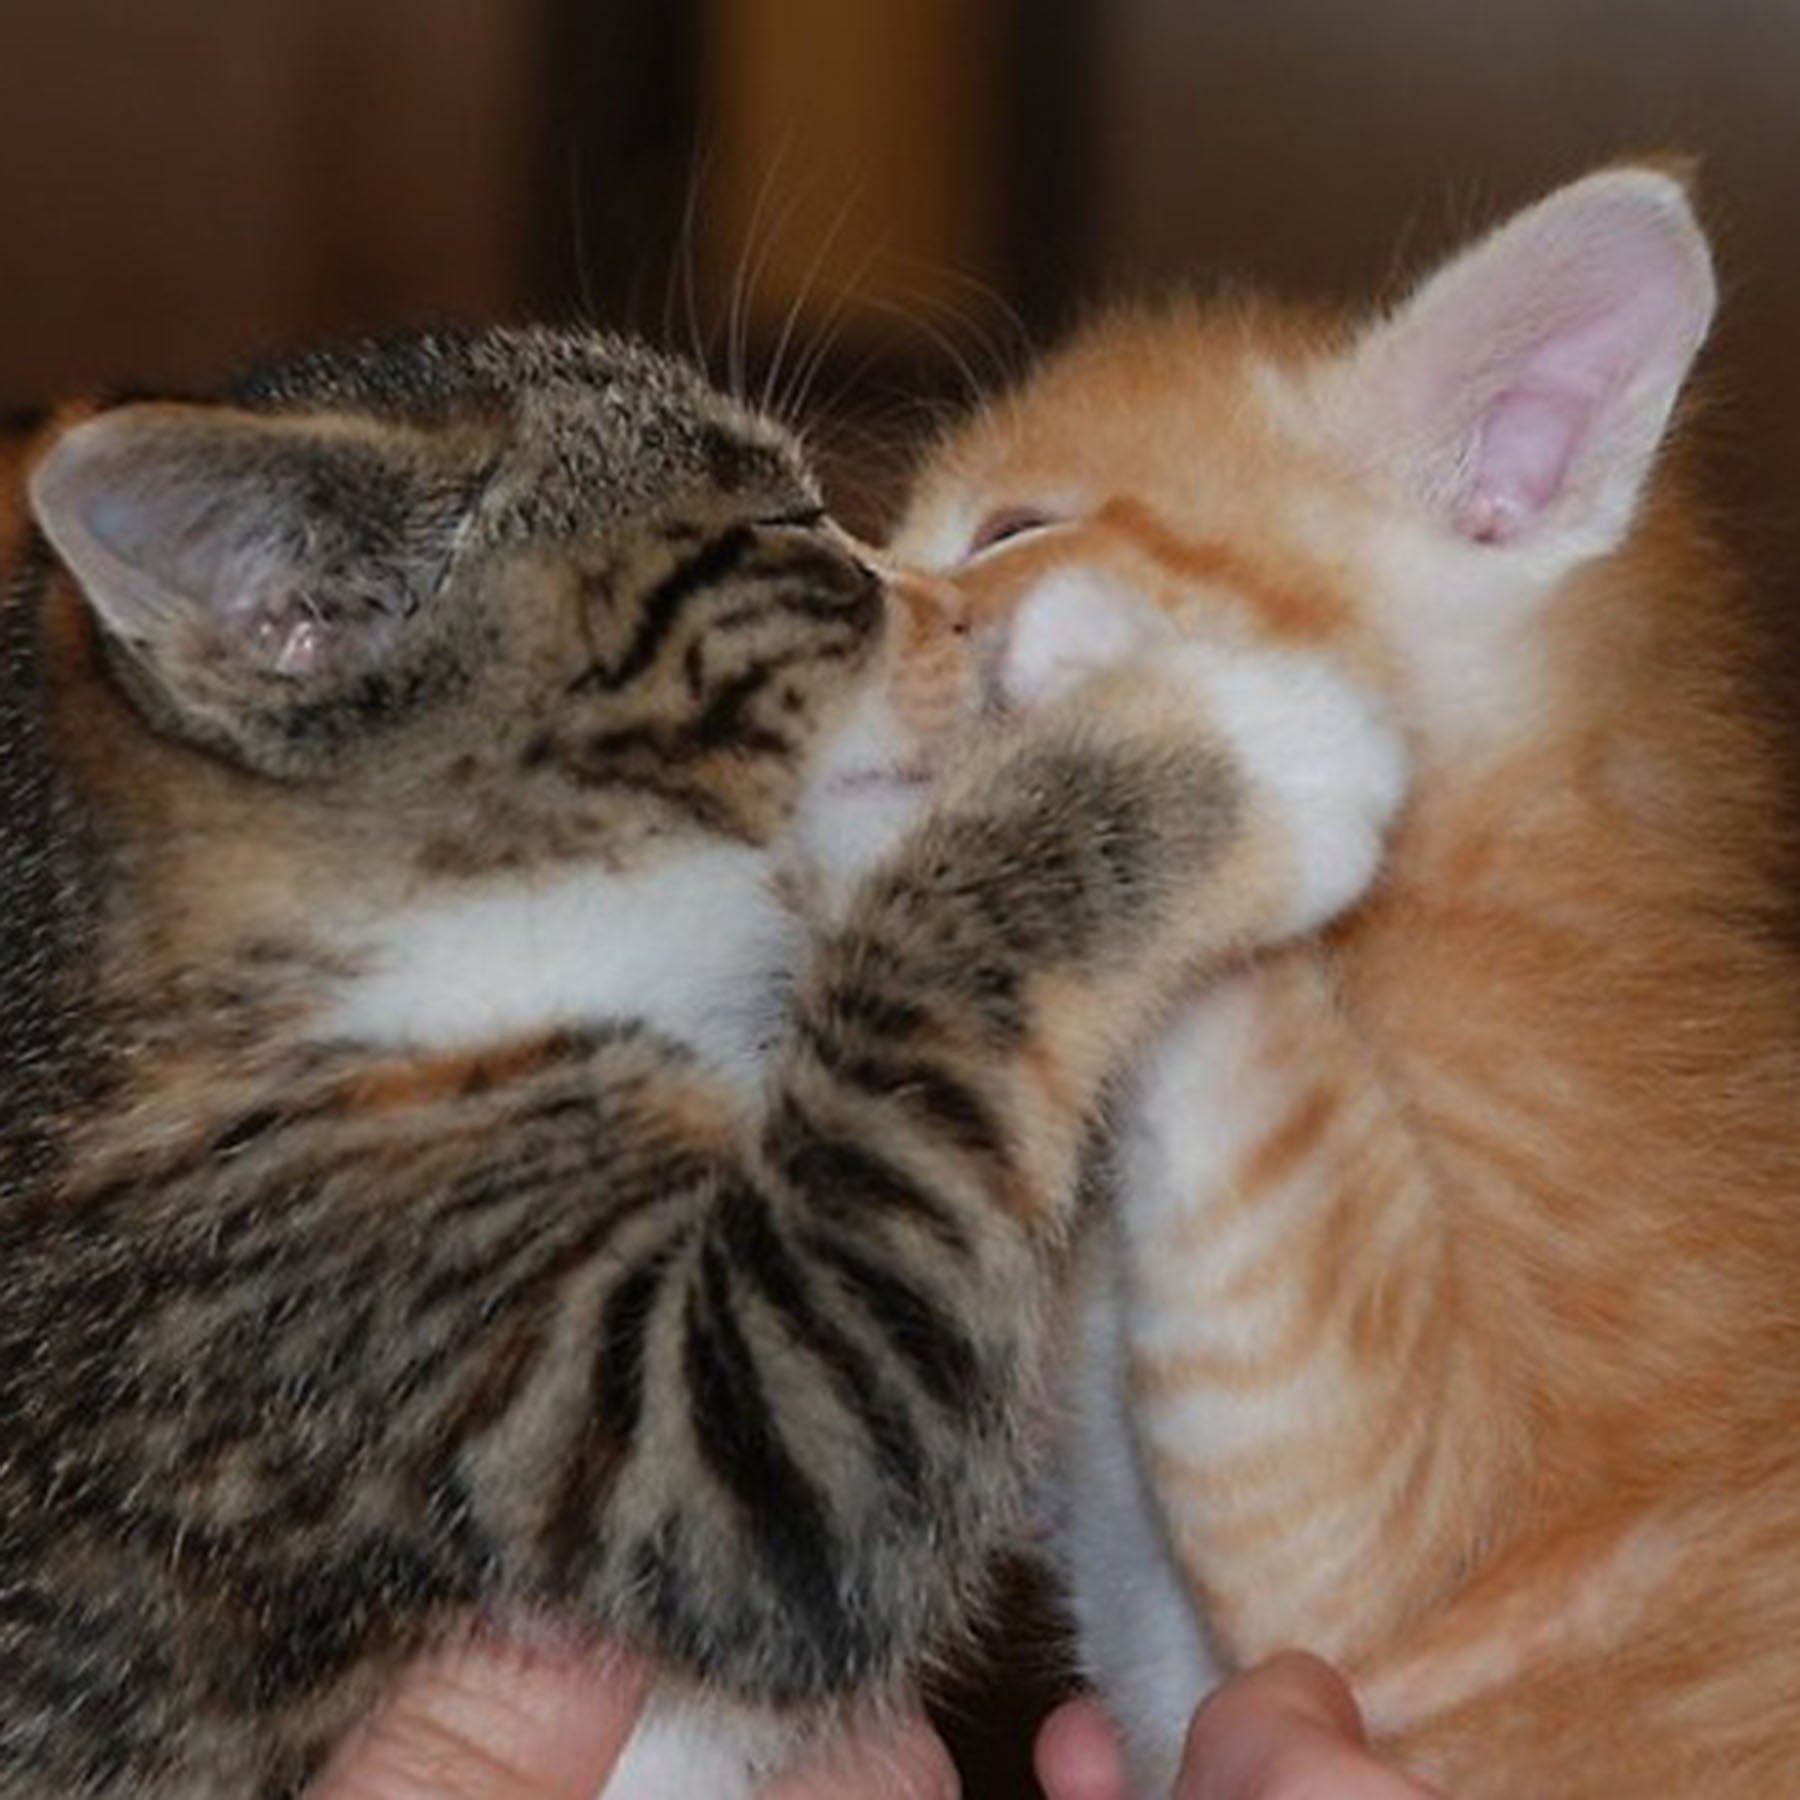 Лизать киску маме видео. Кошки обнимашки. Кошка целует. Котята целуются. Котята обнимаются.